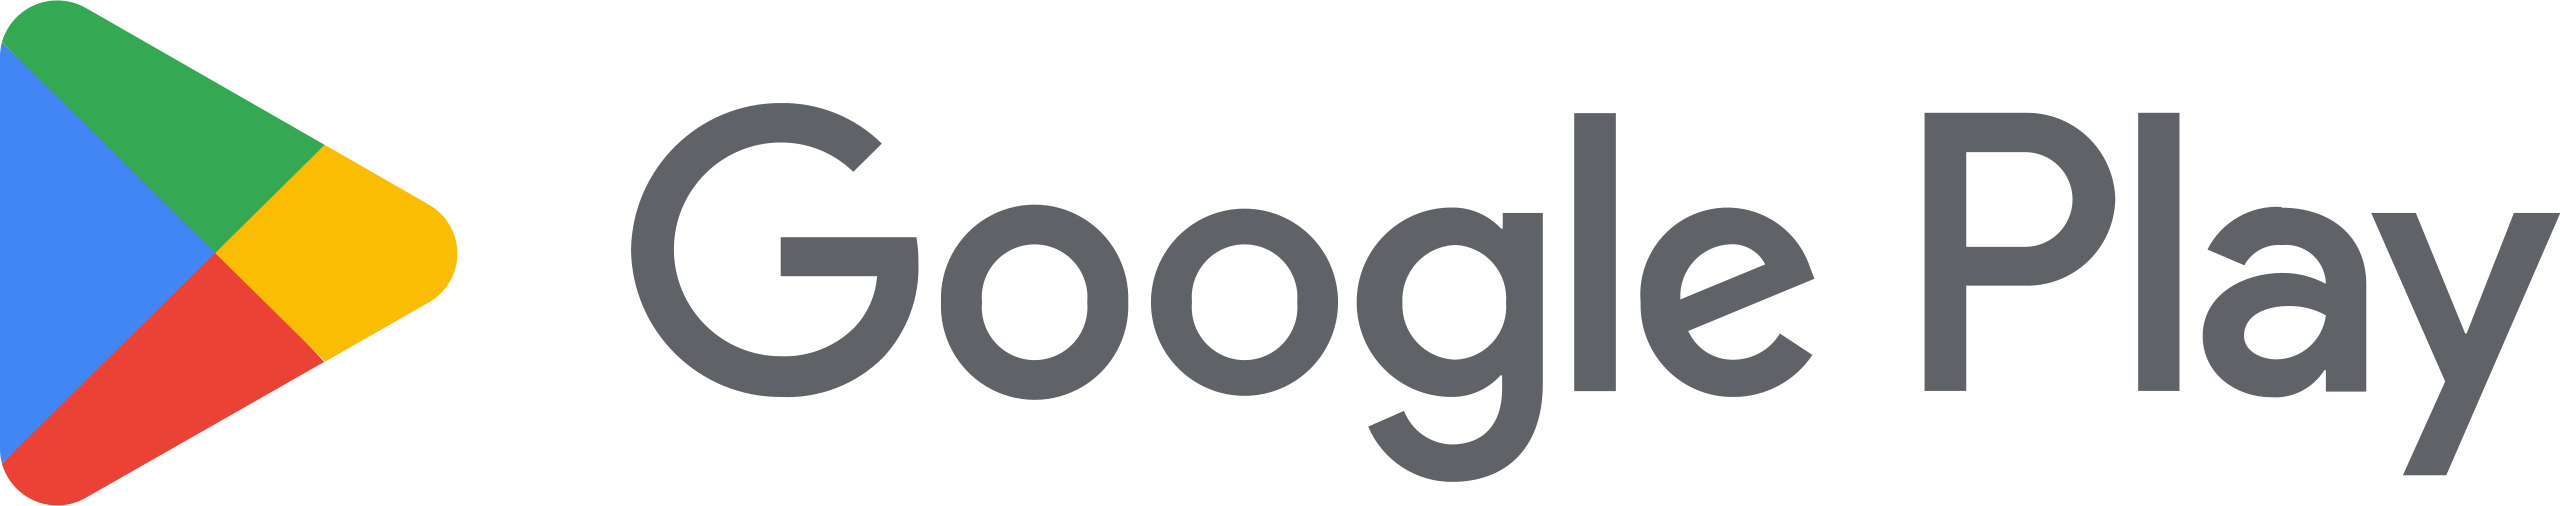 Google_Play_2022_logo.svg